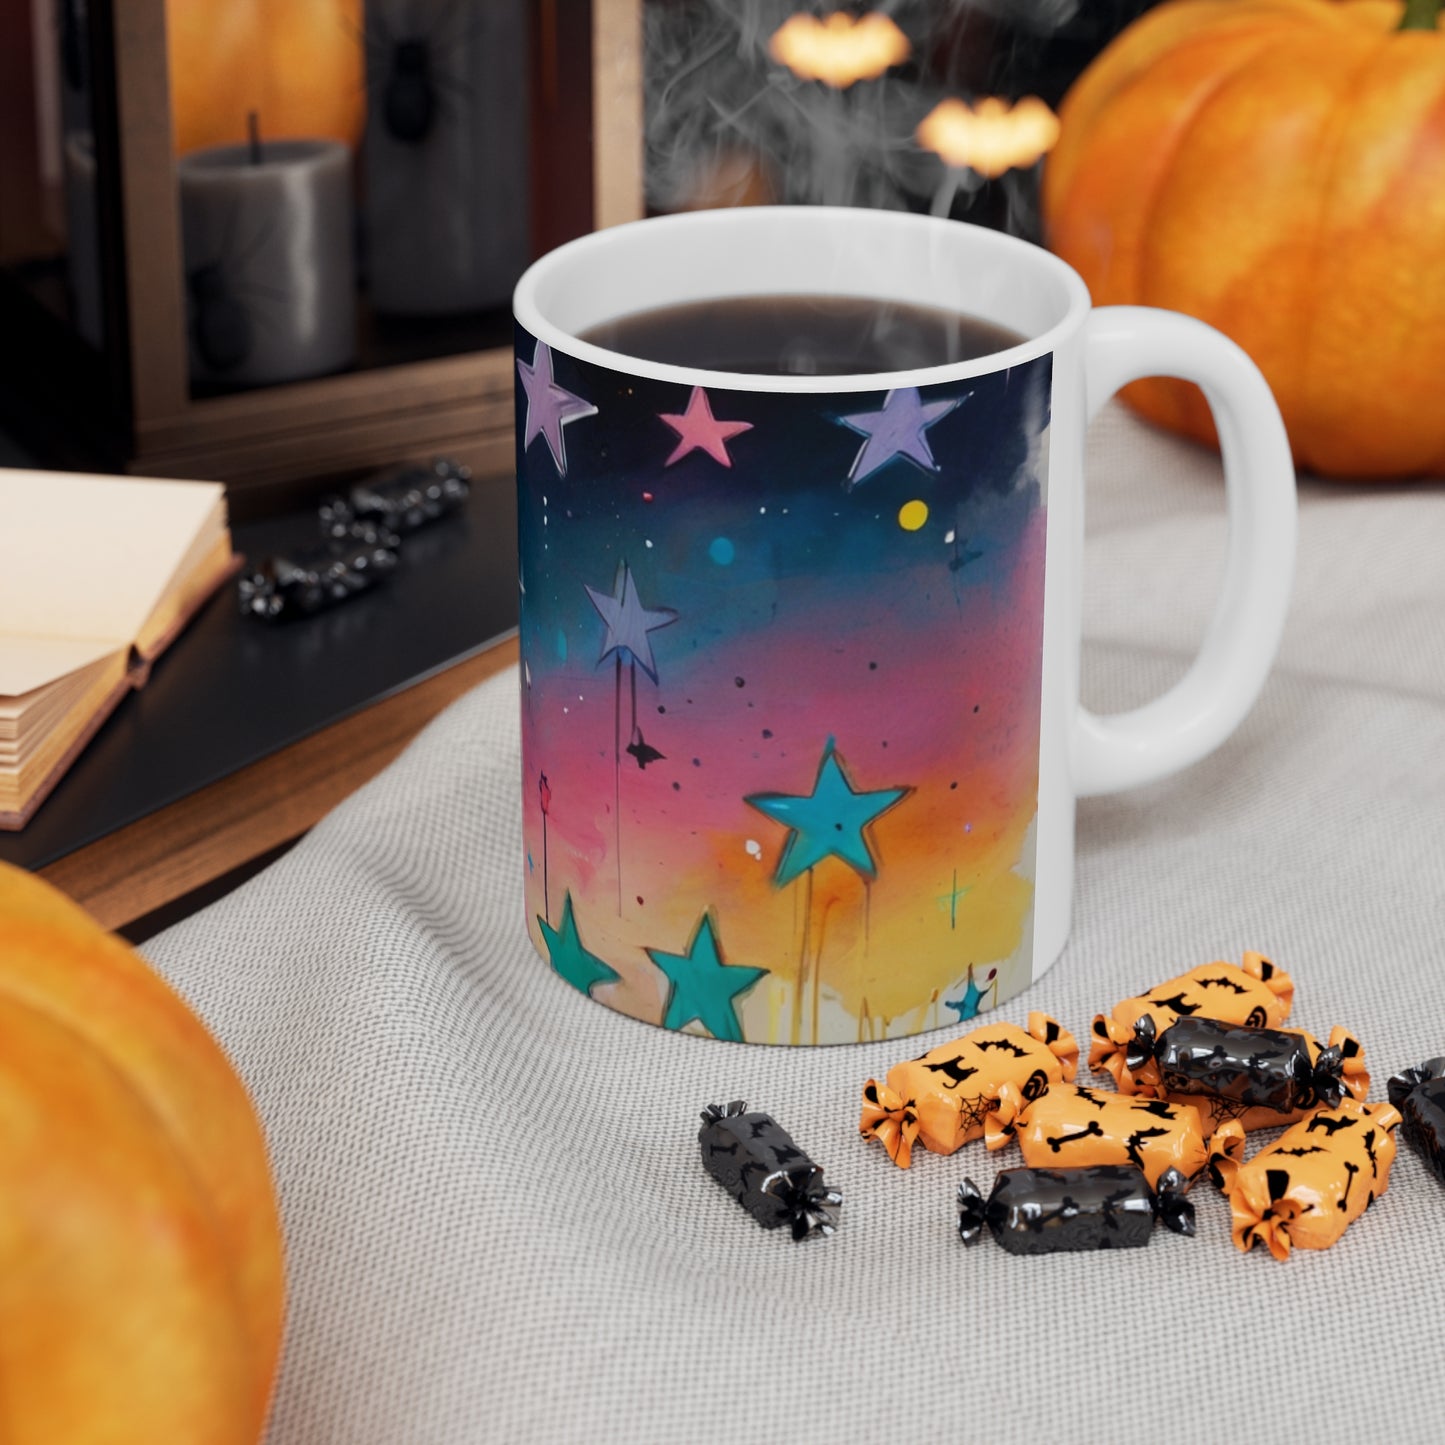 Colourful Sketch Watercolour Stars Mug - Ceramic Coffee Mug 11oz